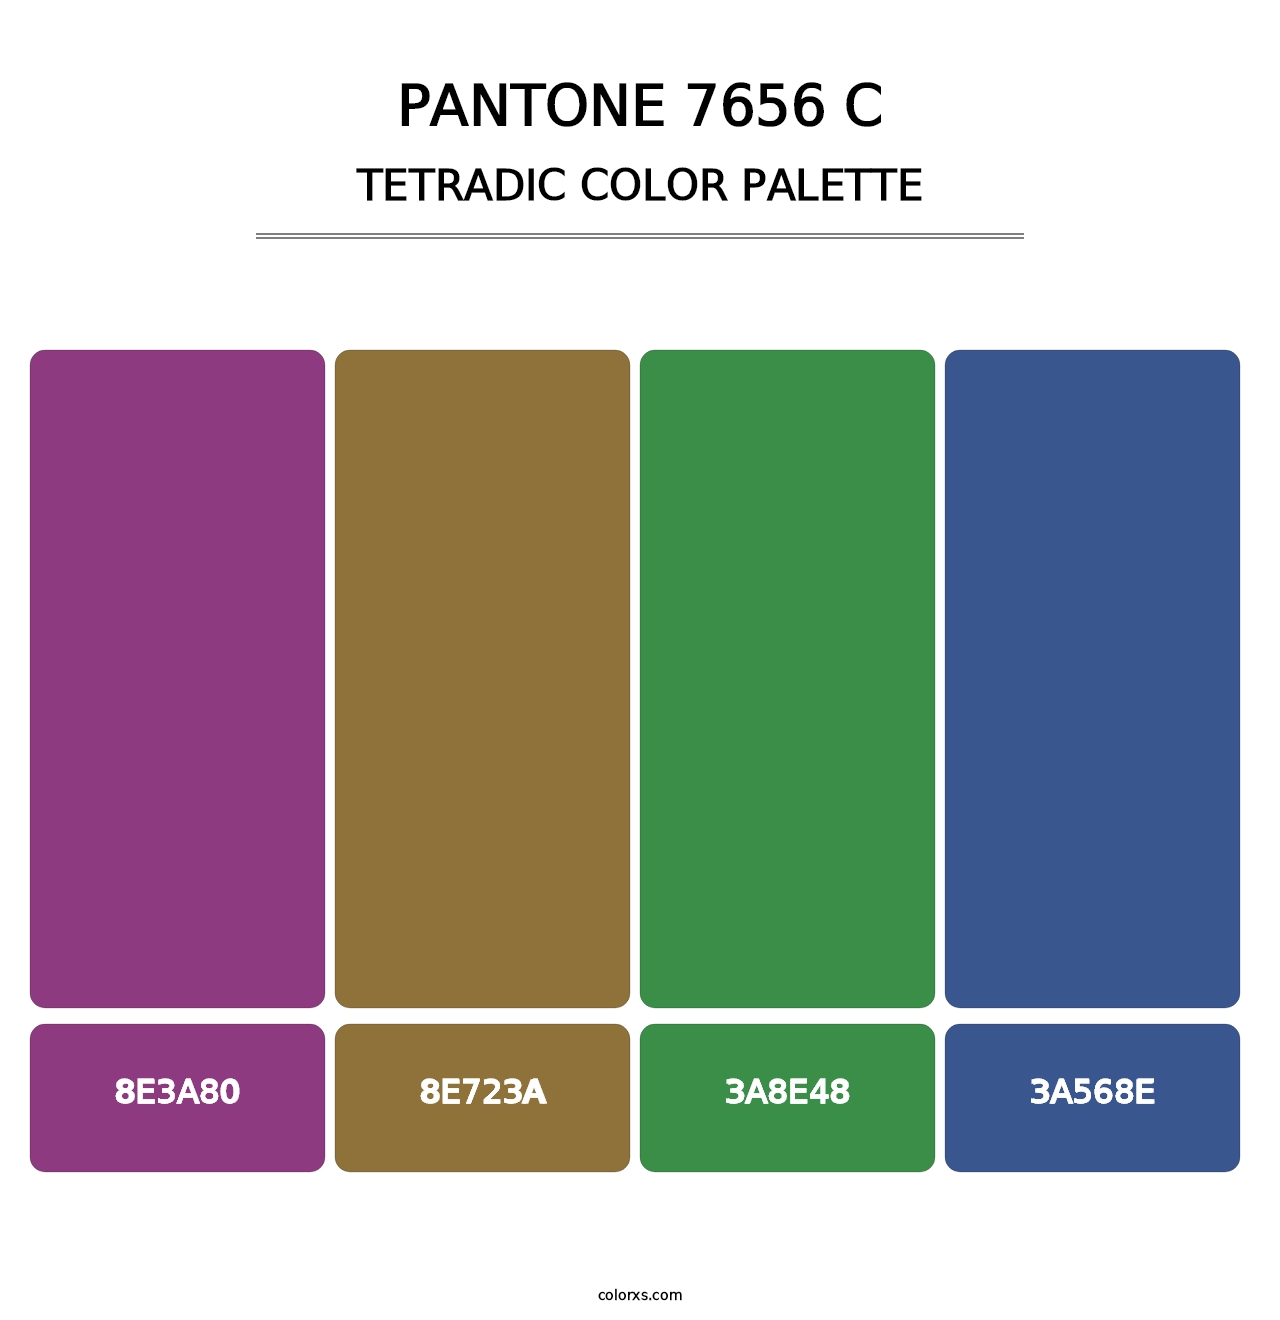 PANTONE 7656 C - Tetradic Color Palette